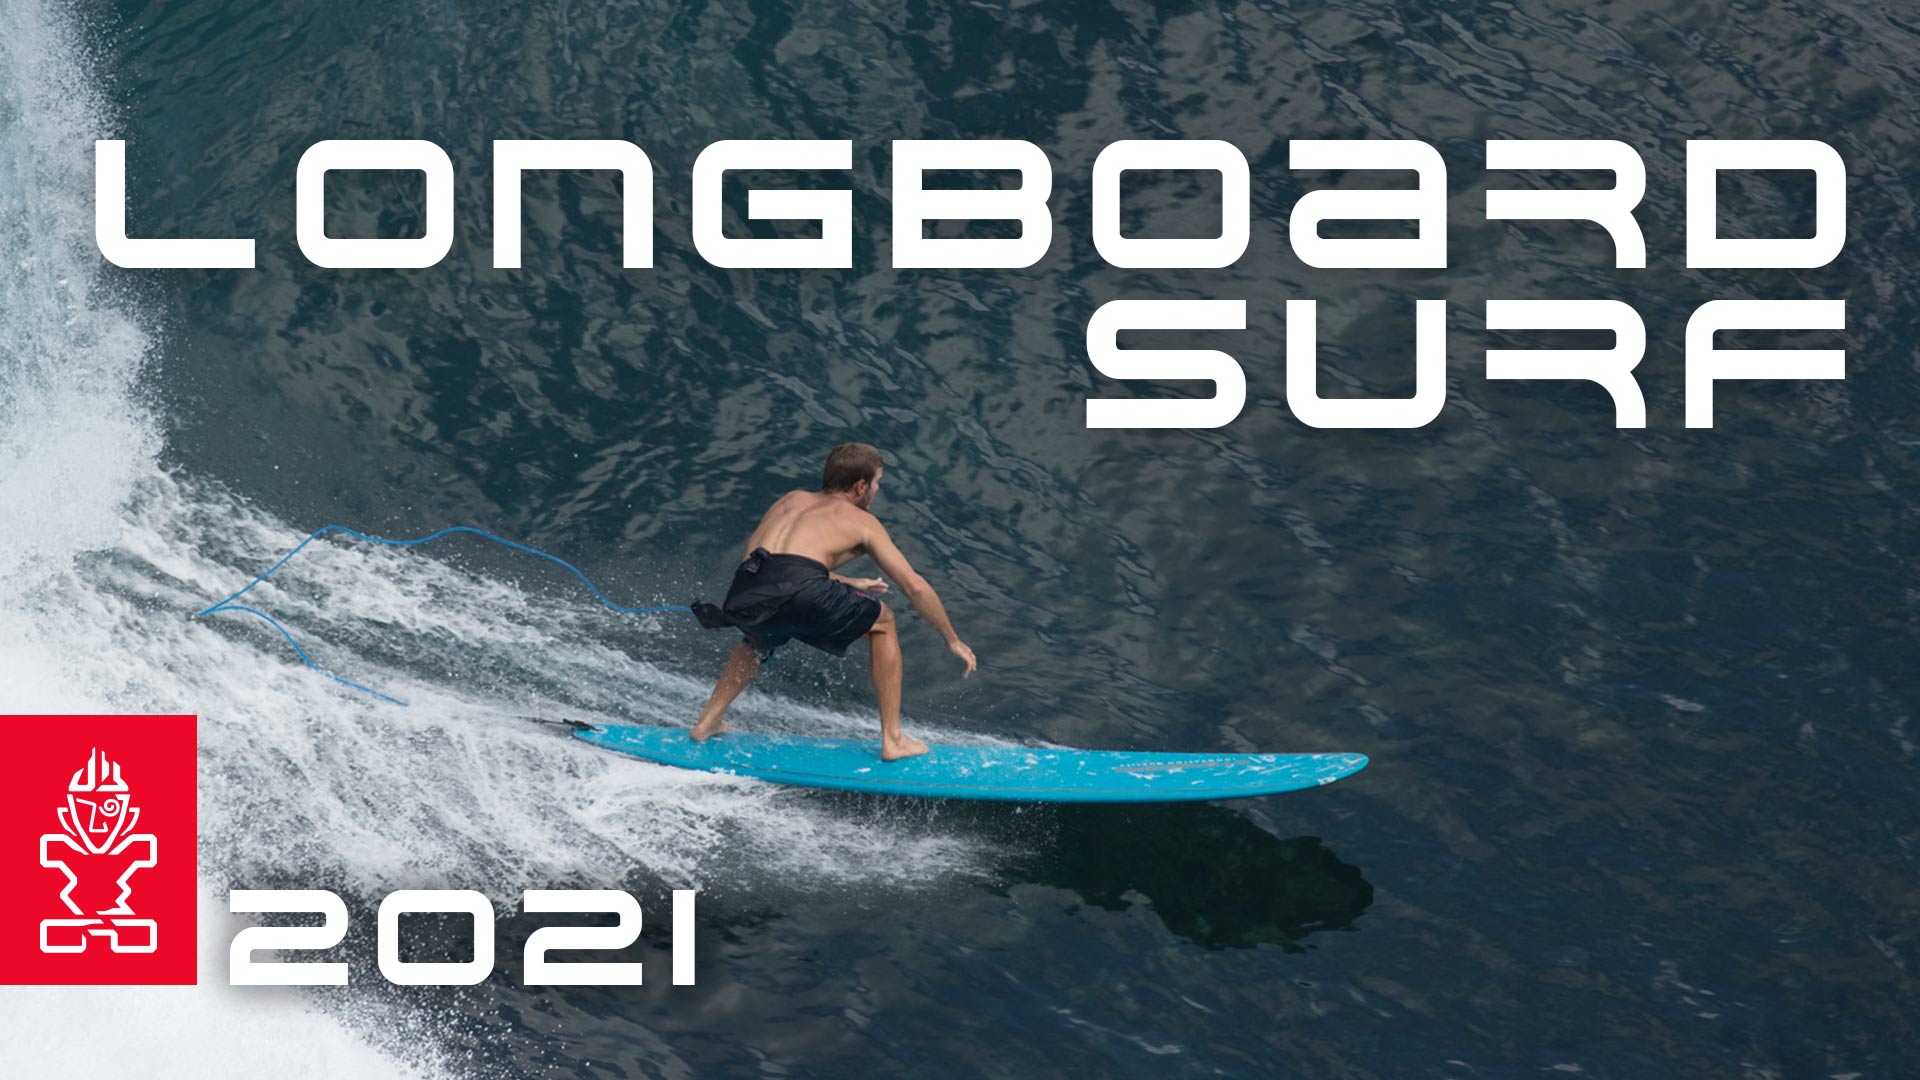 21 Longboard Surf Starboard Sup